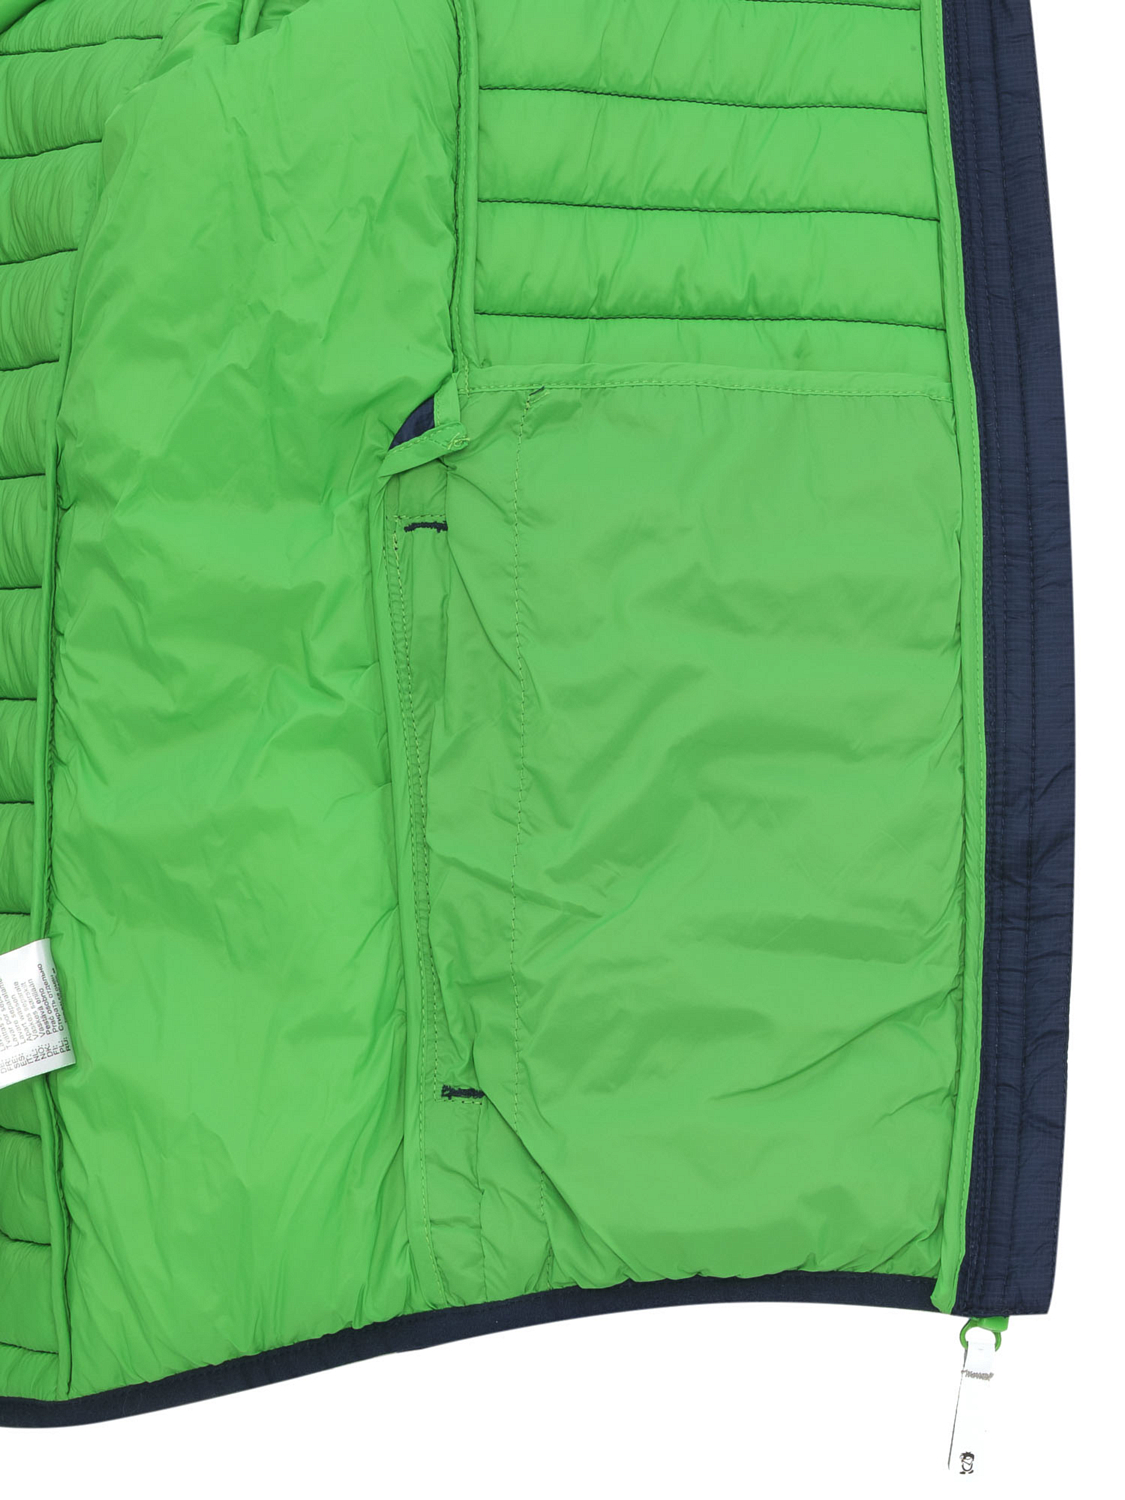 Куртка детская Trollkids Eikefjord Navy/Bright Green